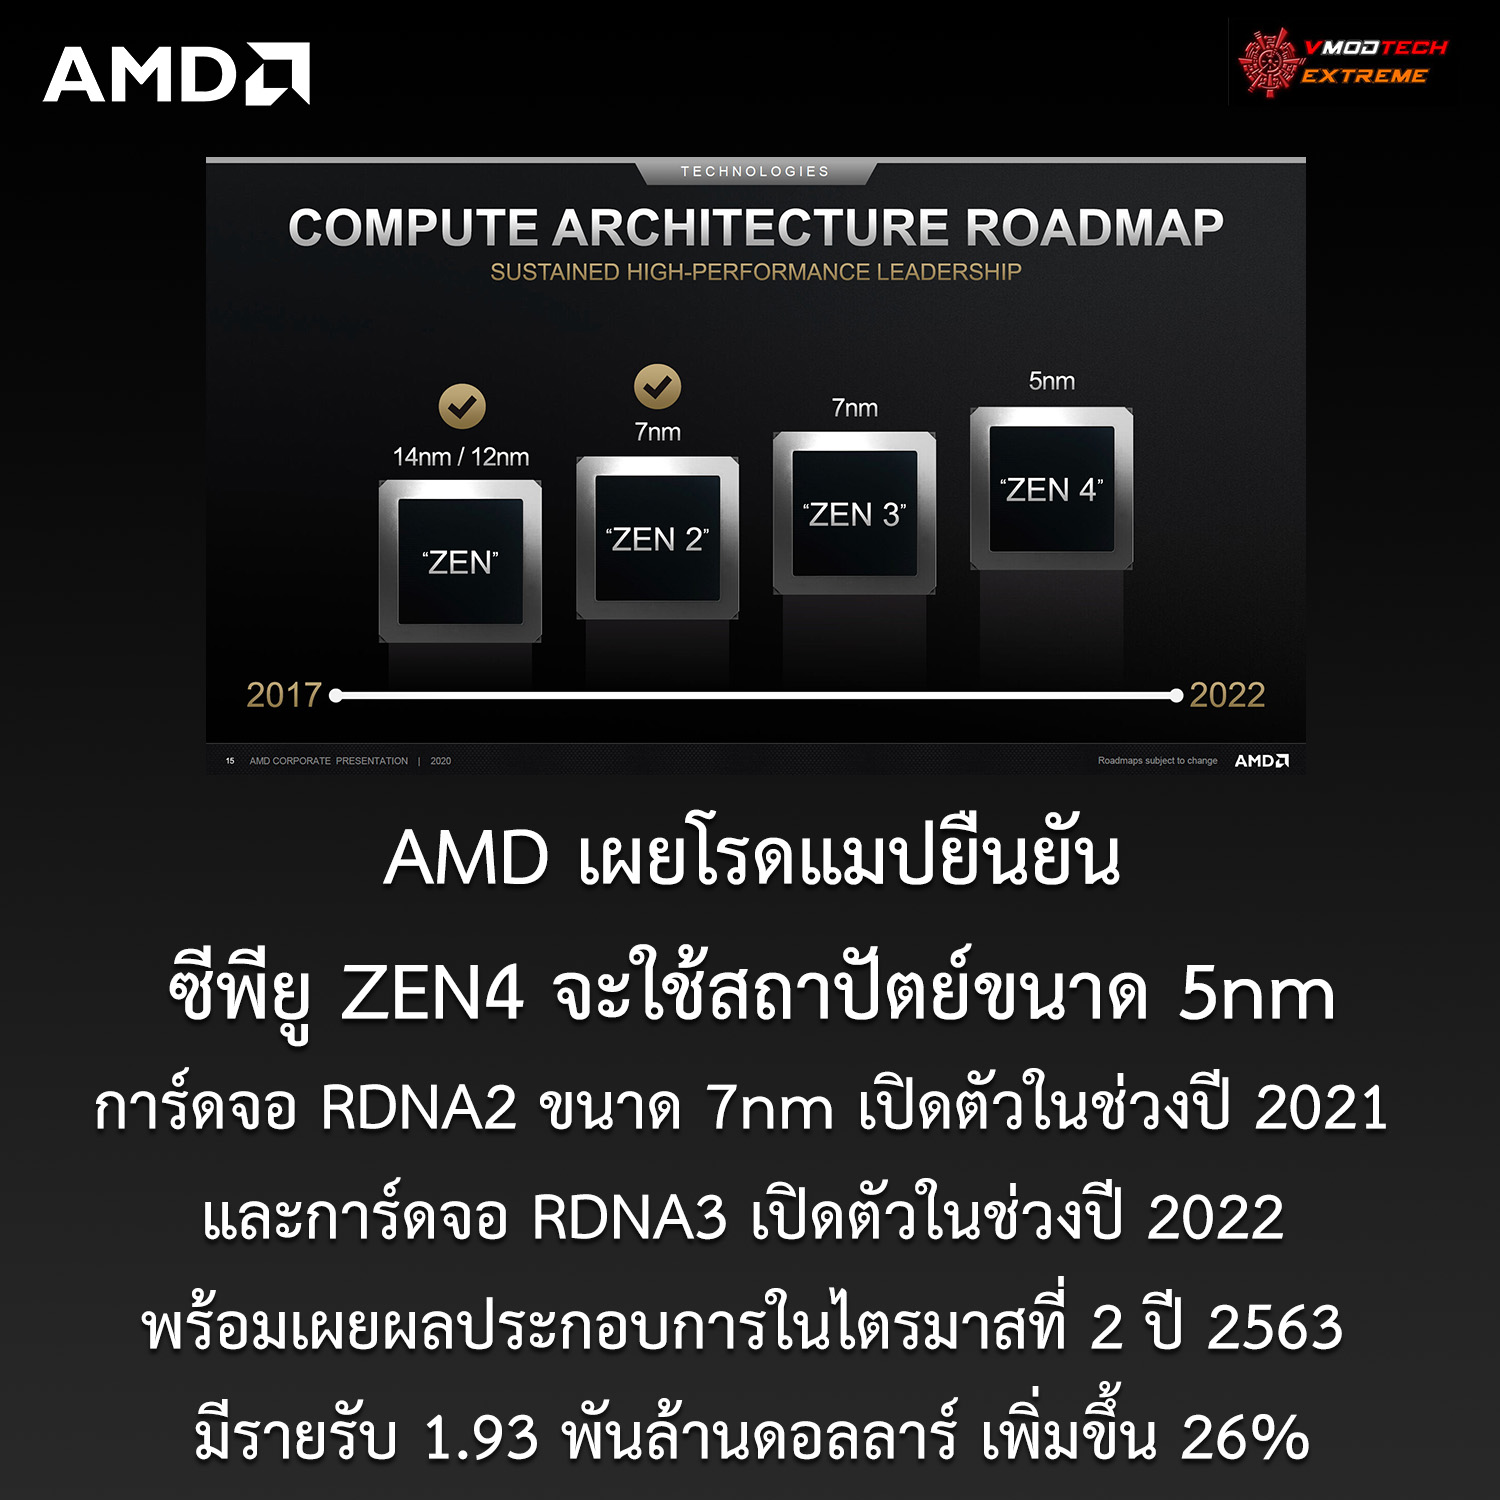 amd zen4 5nm 2022 AMD เผยโรดแมปยืนยันซีพียู ZEN4 จะใช้สถาปัตย์ขนาด 5nm และเผยผลประกอบการในไตรมาสที่ 2 ปี 2563 มีรายรับ 1.93 พันล้านดอลลาร์ เพิ่มขึ้น 26%